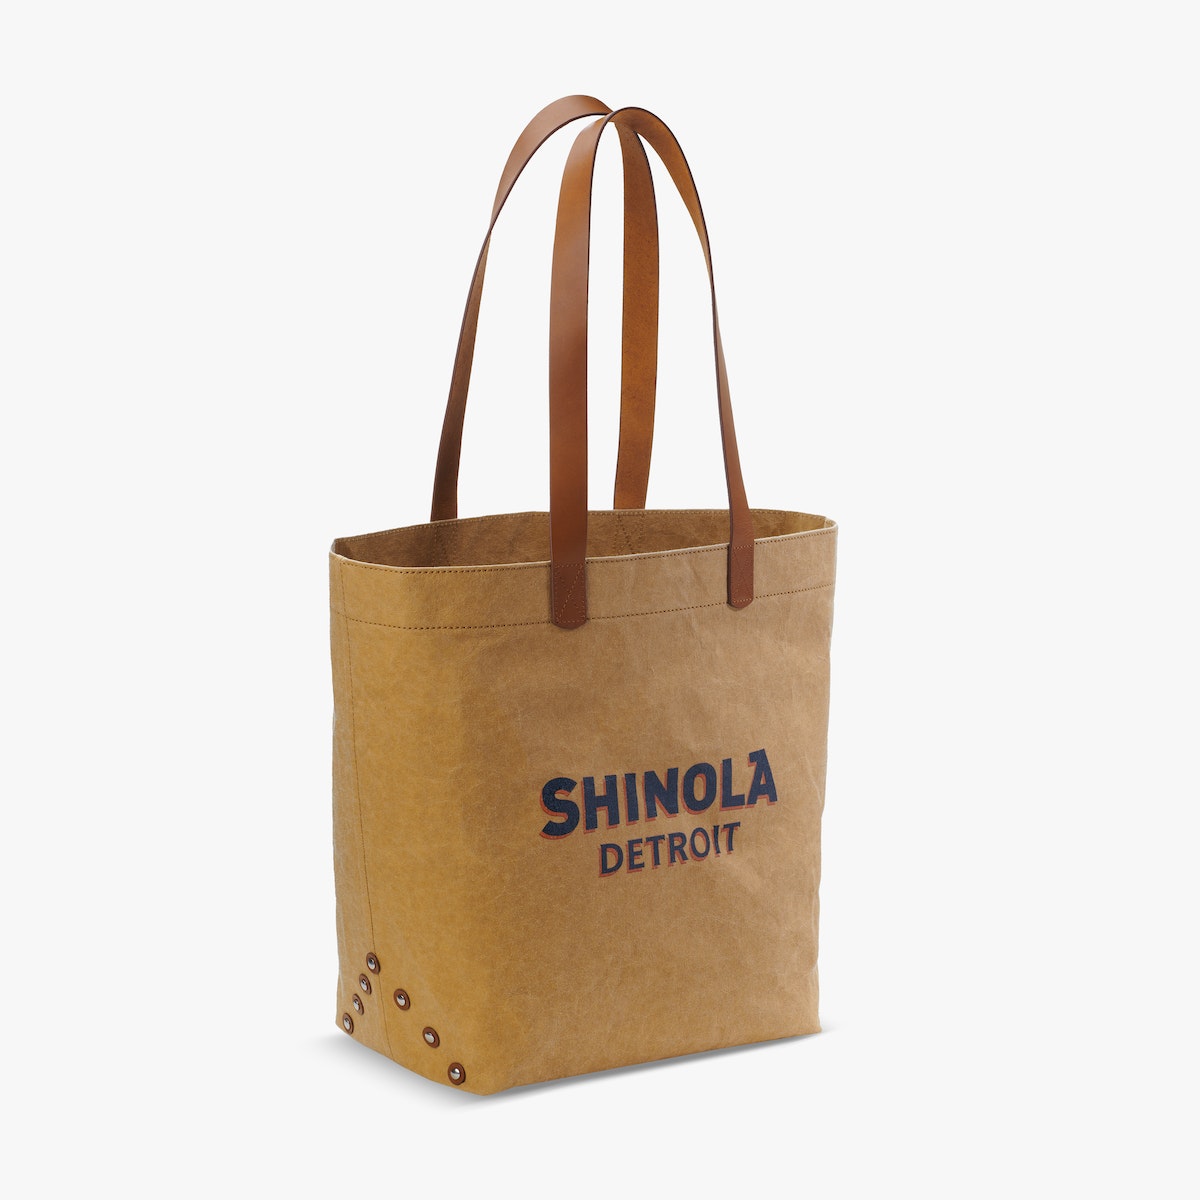 SHINOLA LOGO TOTE | Supernatural Paper and Vachetta Leather